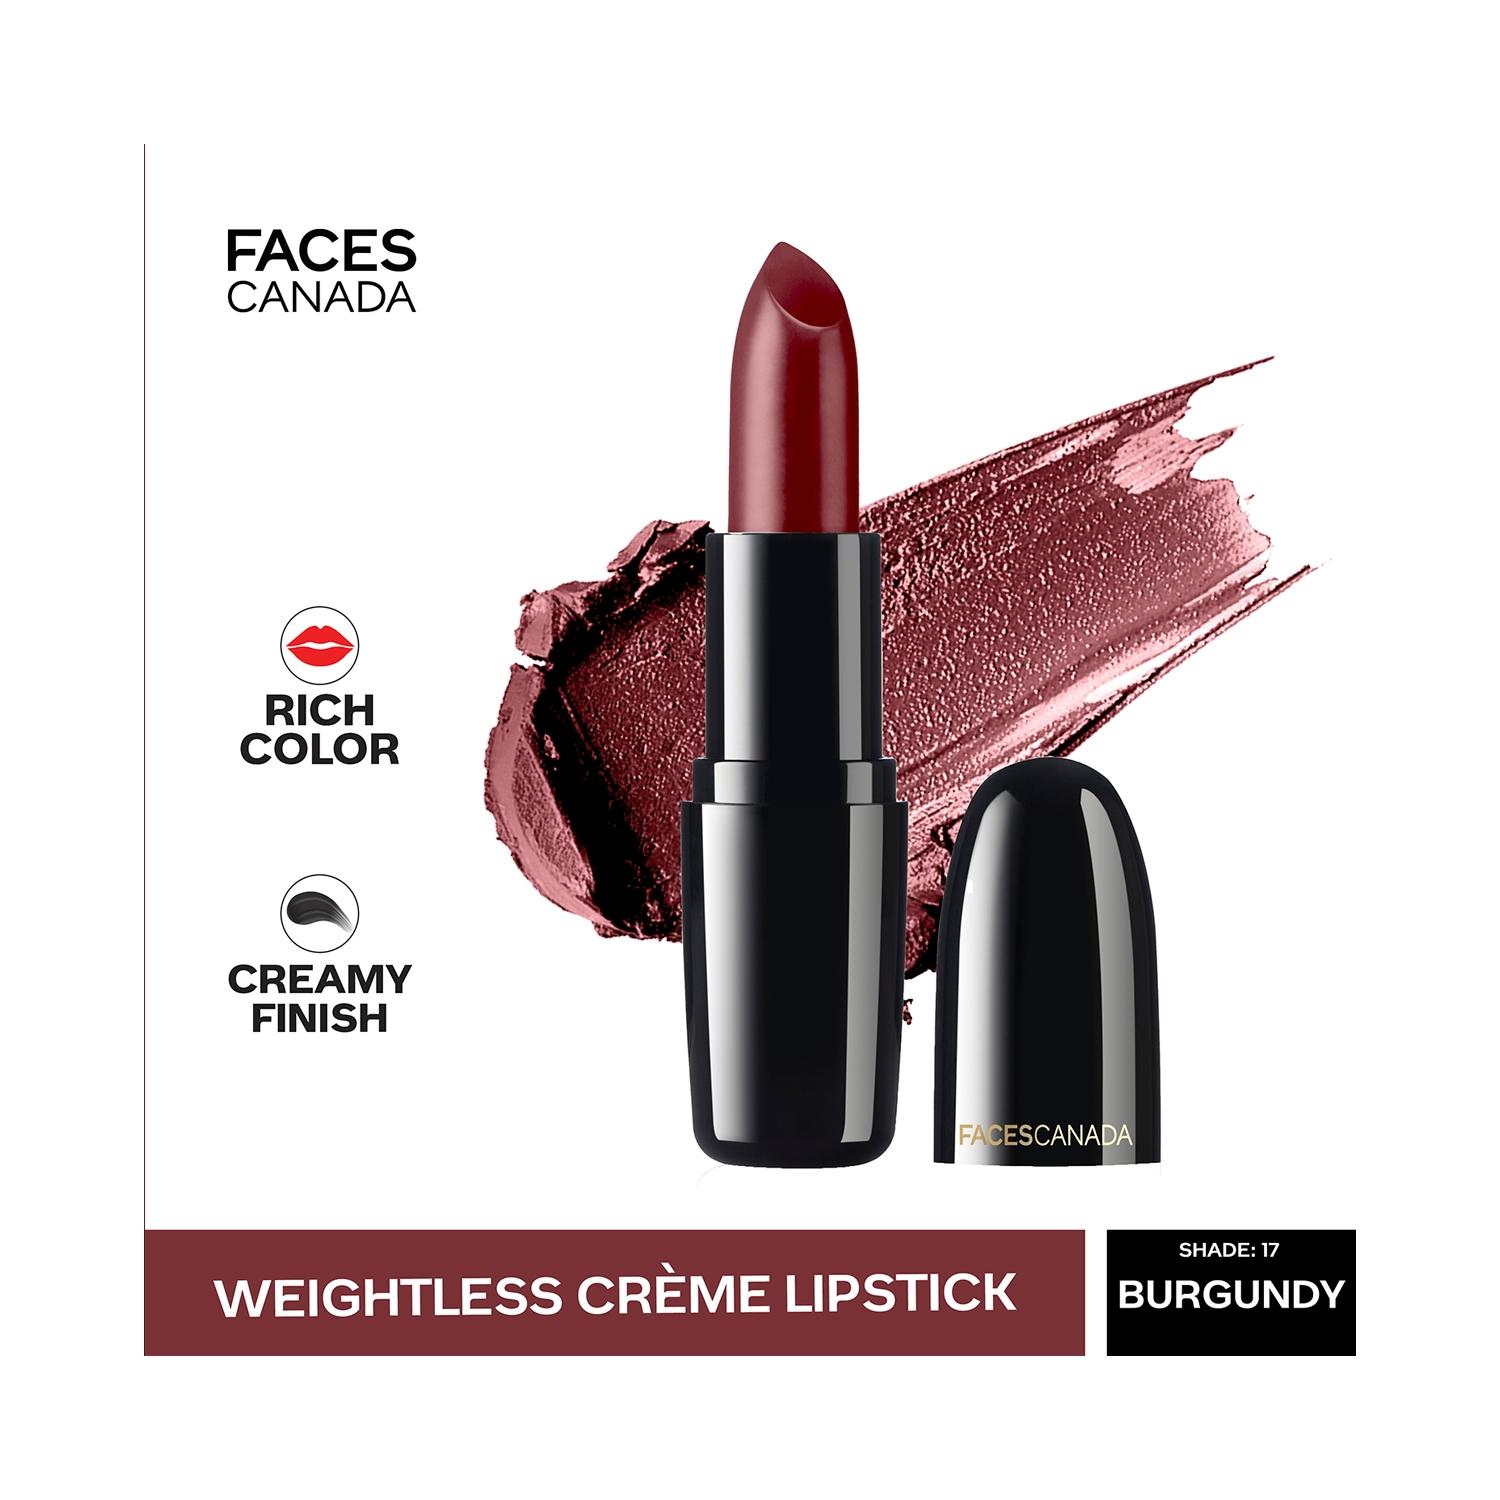 Faces Canada Weightless Creme Finish Lipstick - 17 Burgundy (4g)